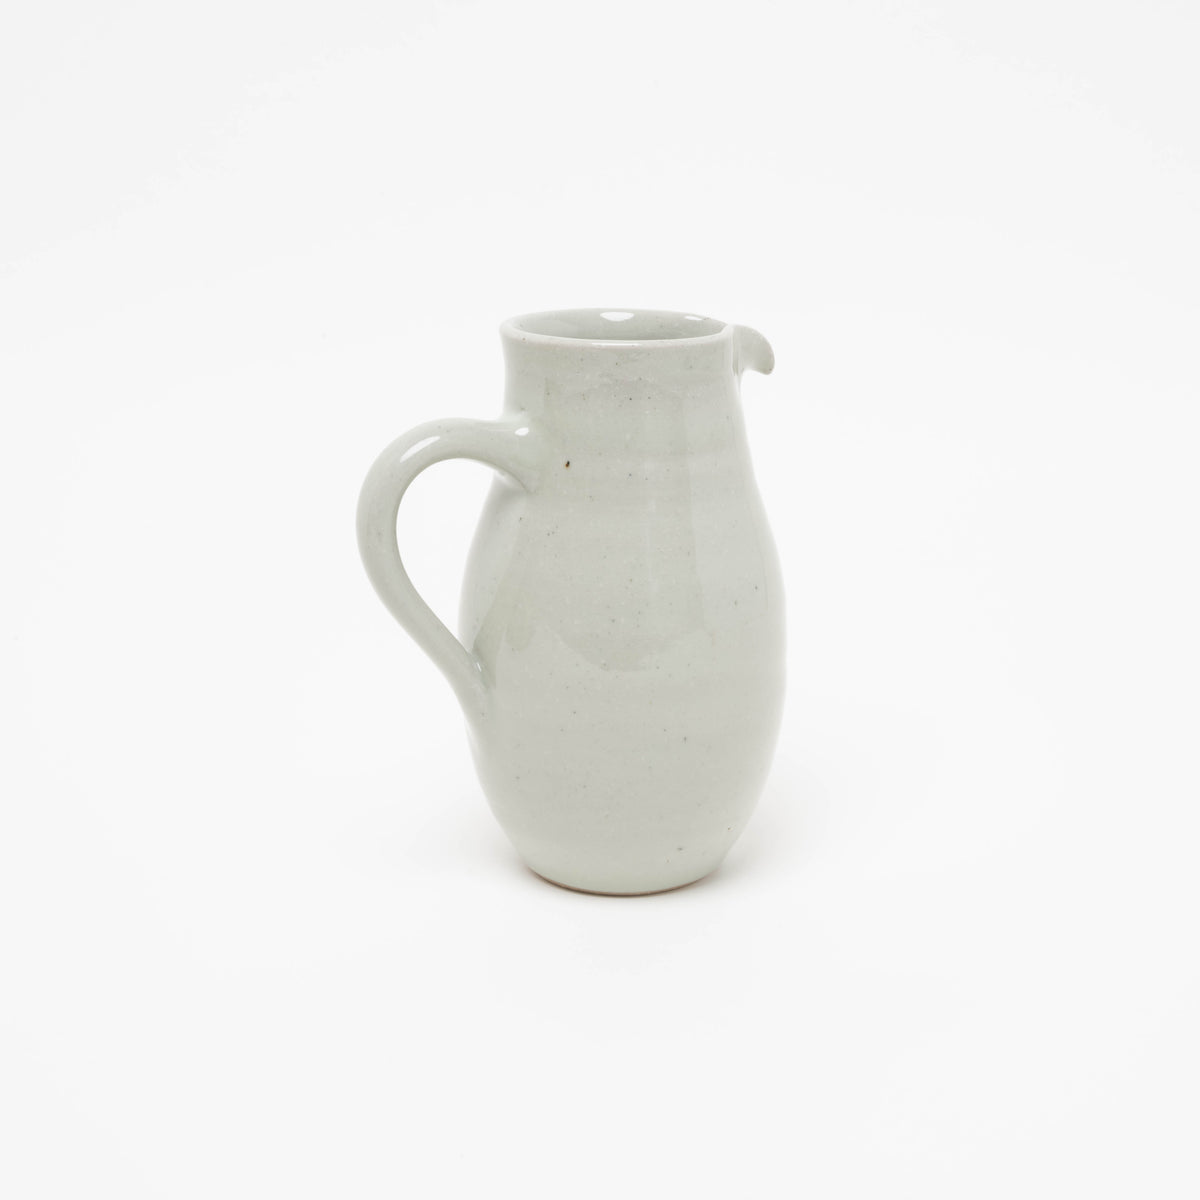 Urform - stoneware jug with handle